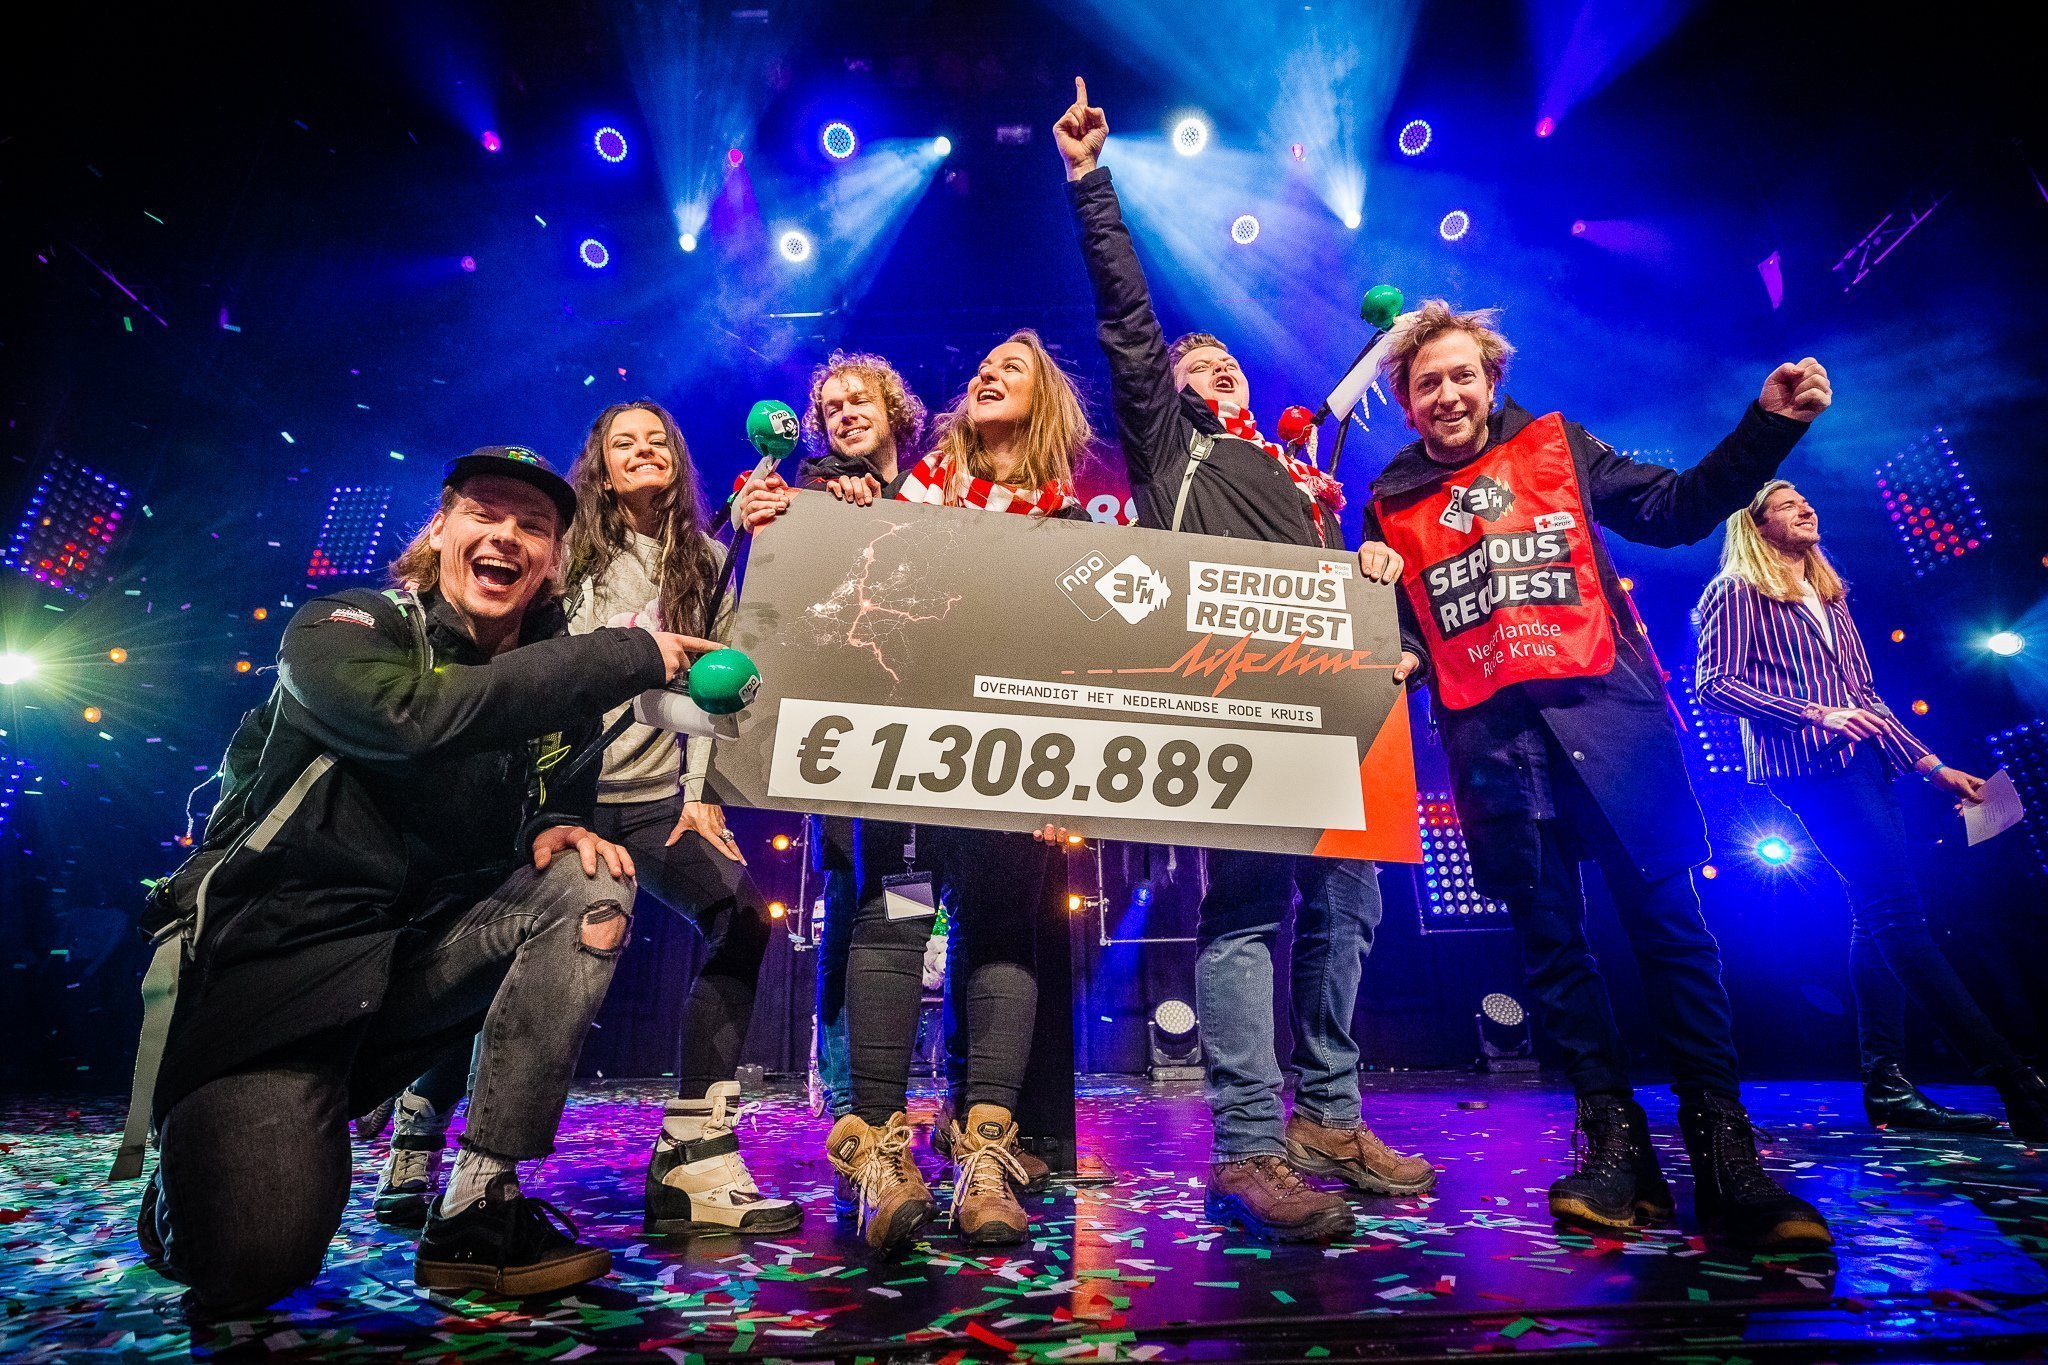 helling Verduisteren Stevenson Eindstand Serious Request: Lifeline 2018 loopt op tot 1,4 miljoen euro -  RadioFreak.nl